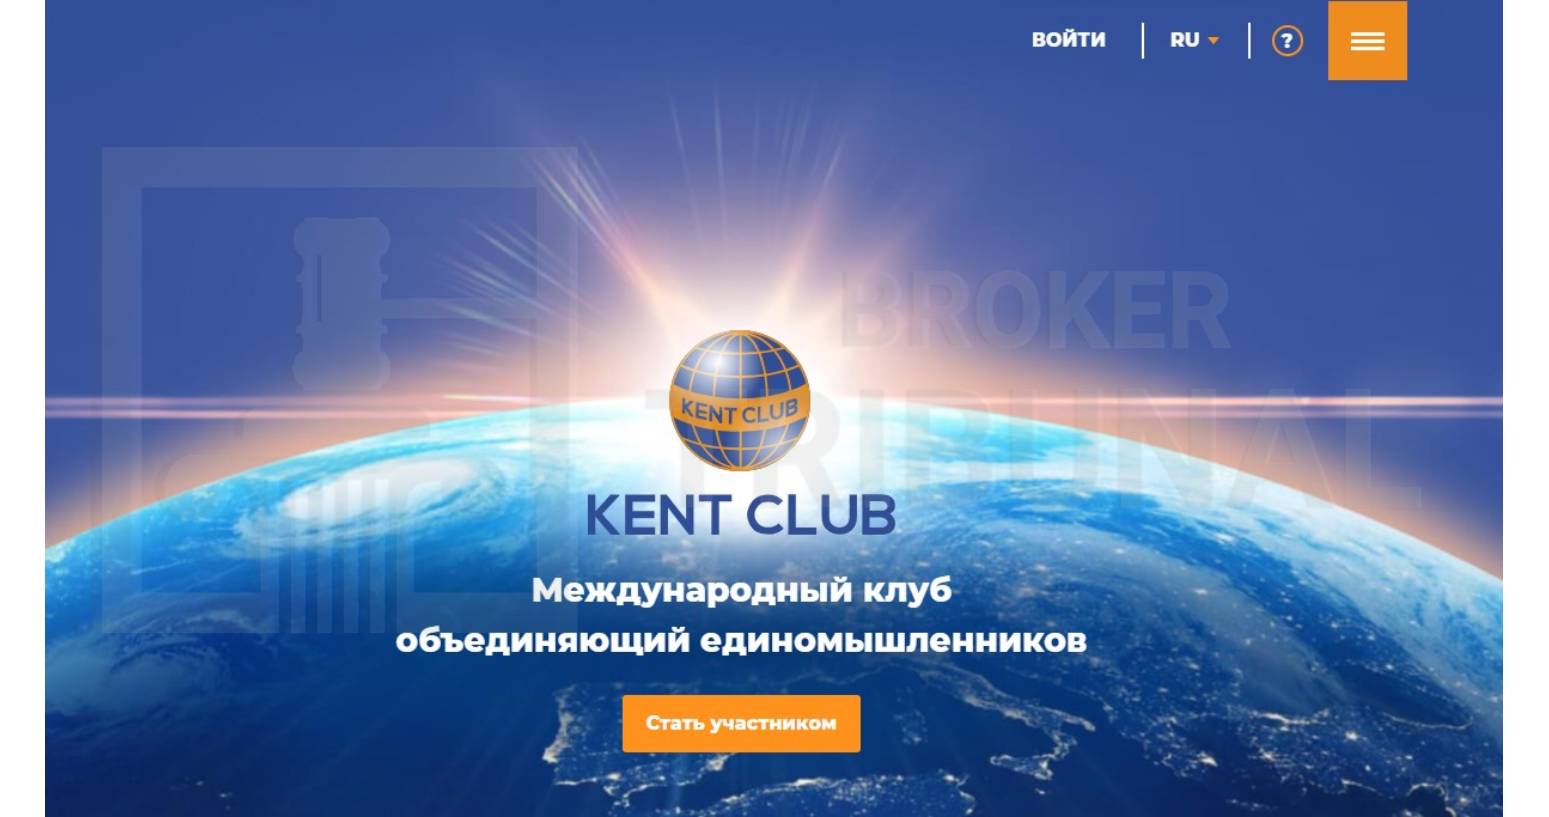 Kent Club